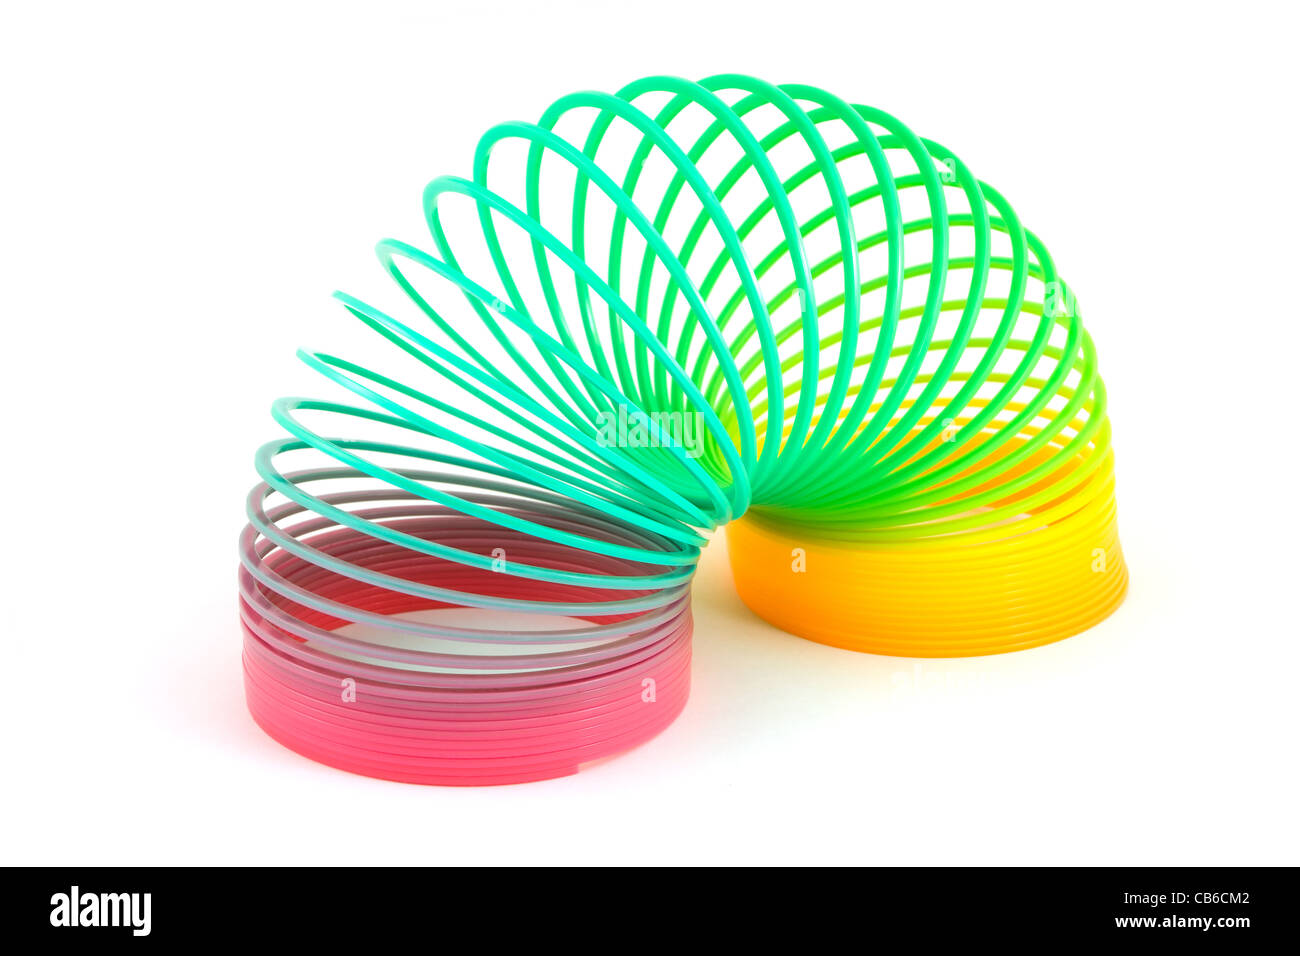 Slinky toy isolated on white Stock Photo